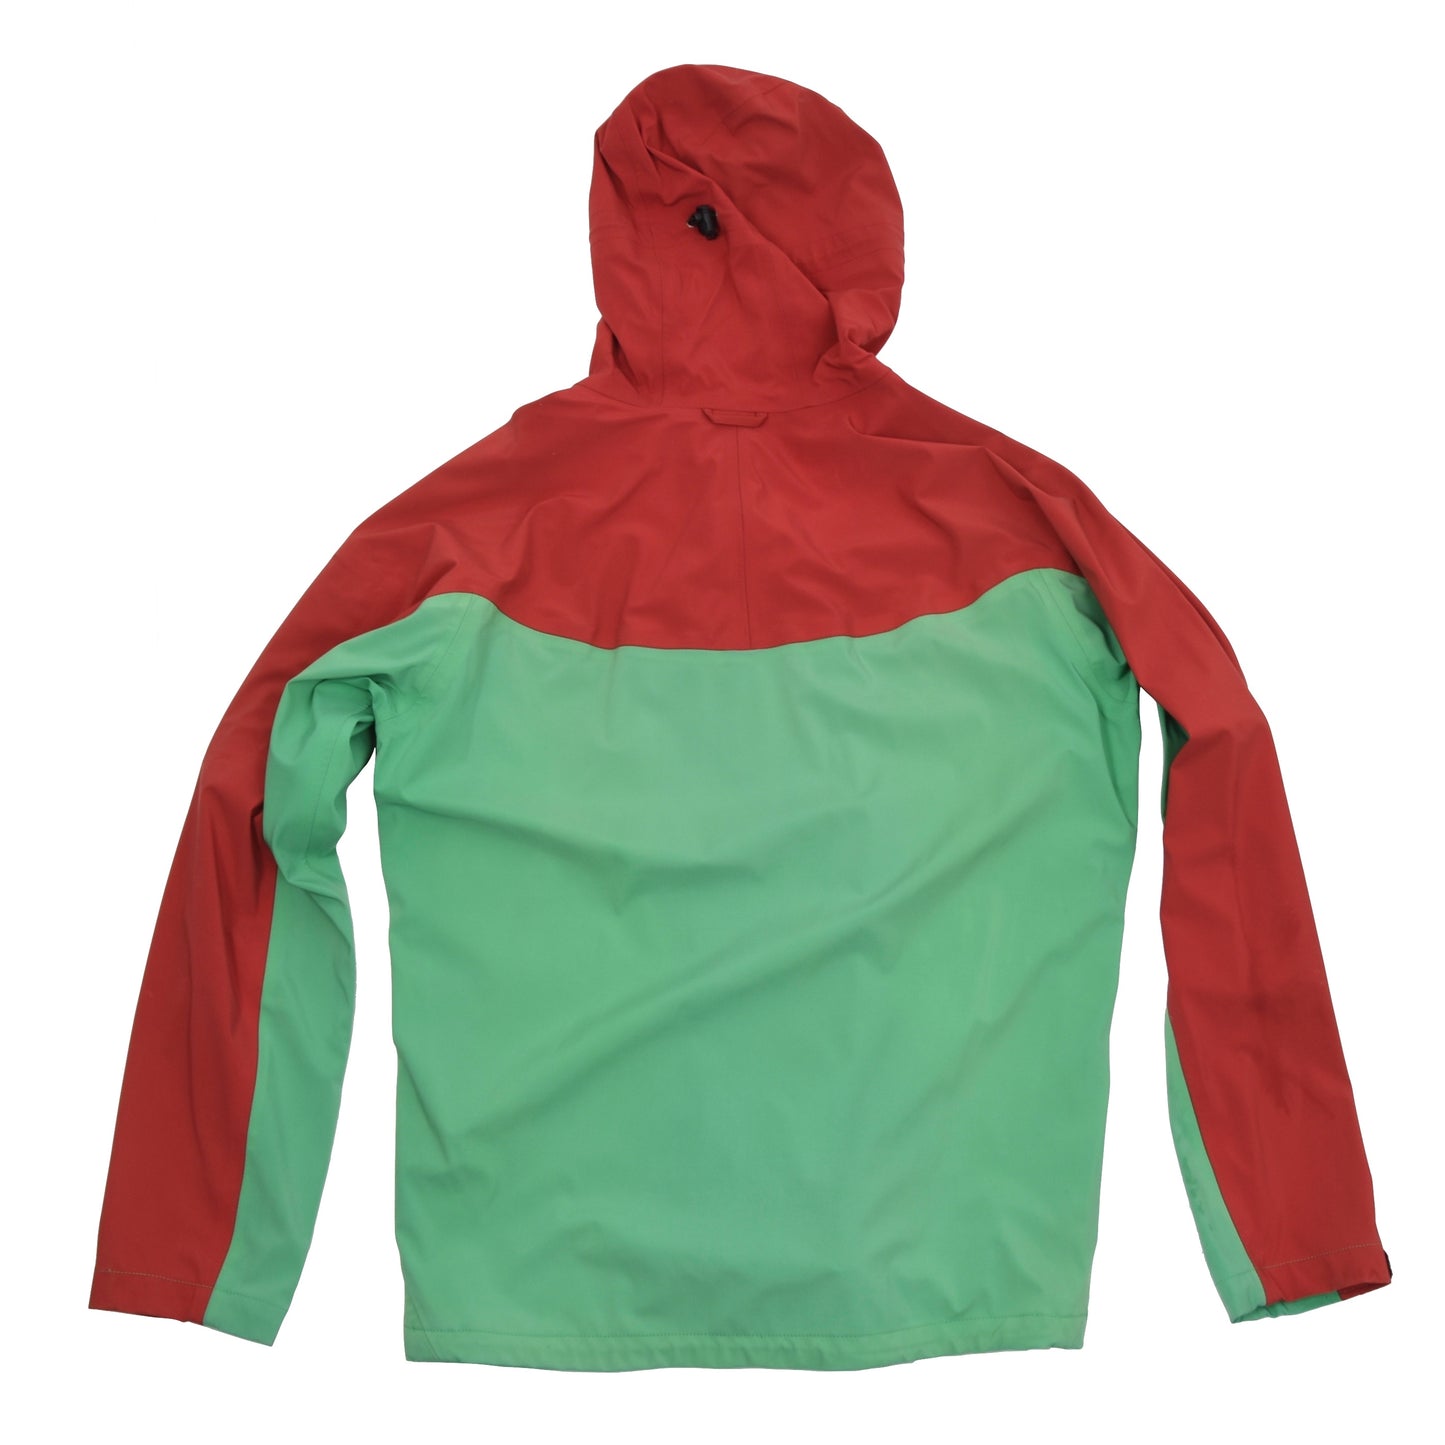 Maloja Moon Ride Jacket Size M - Green & Red